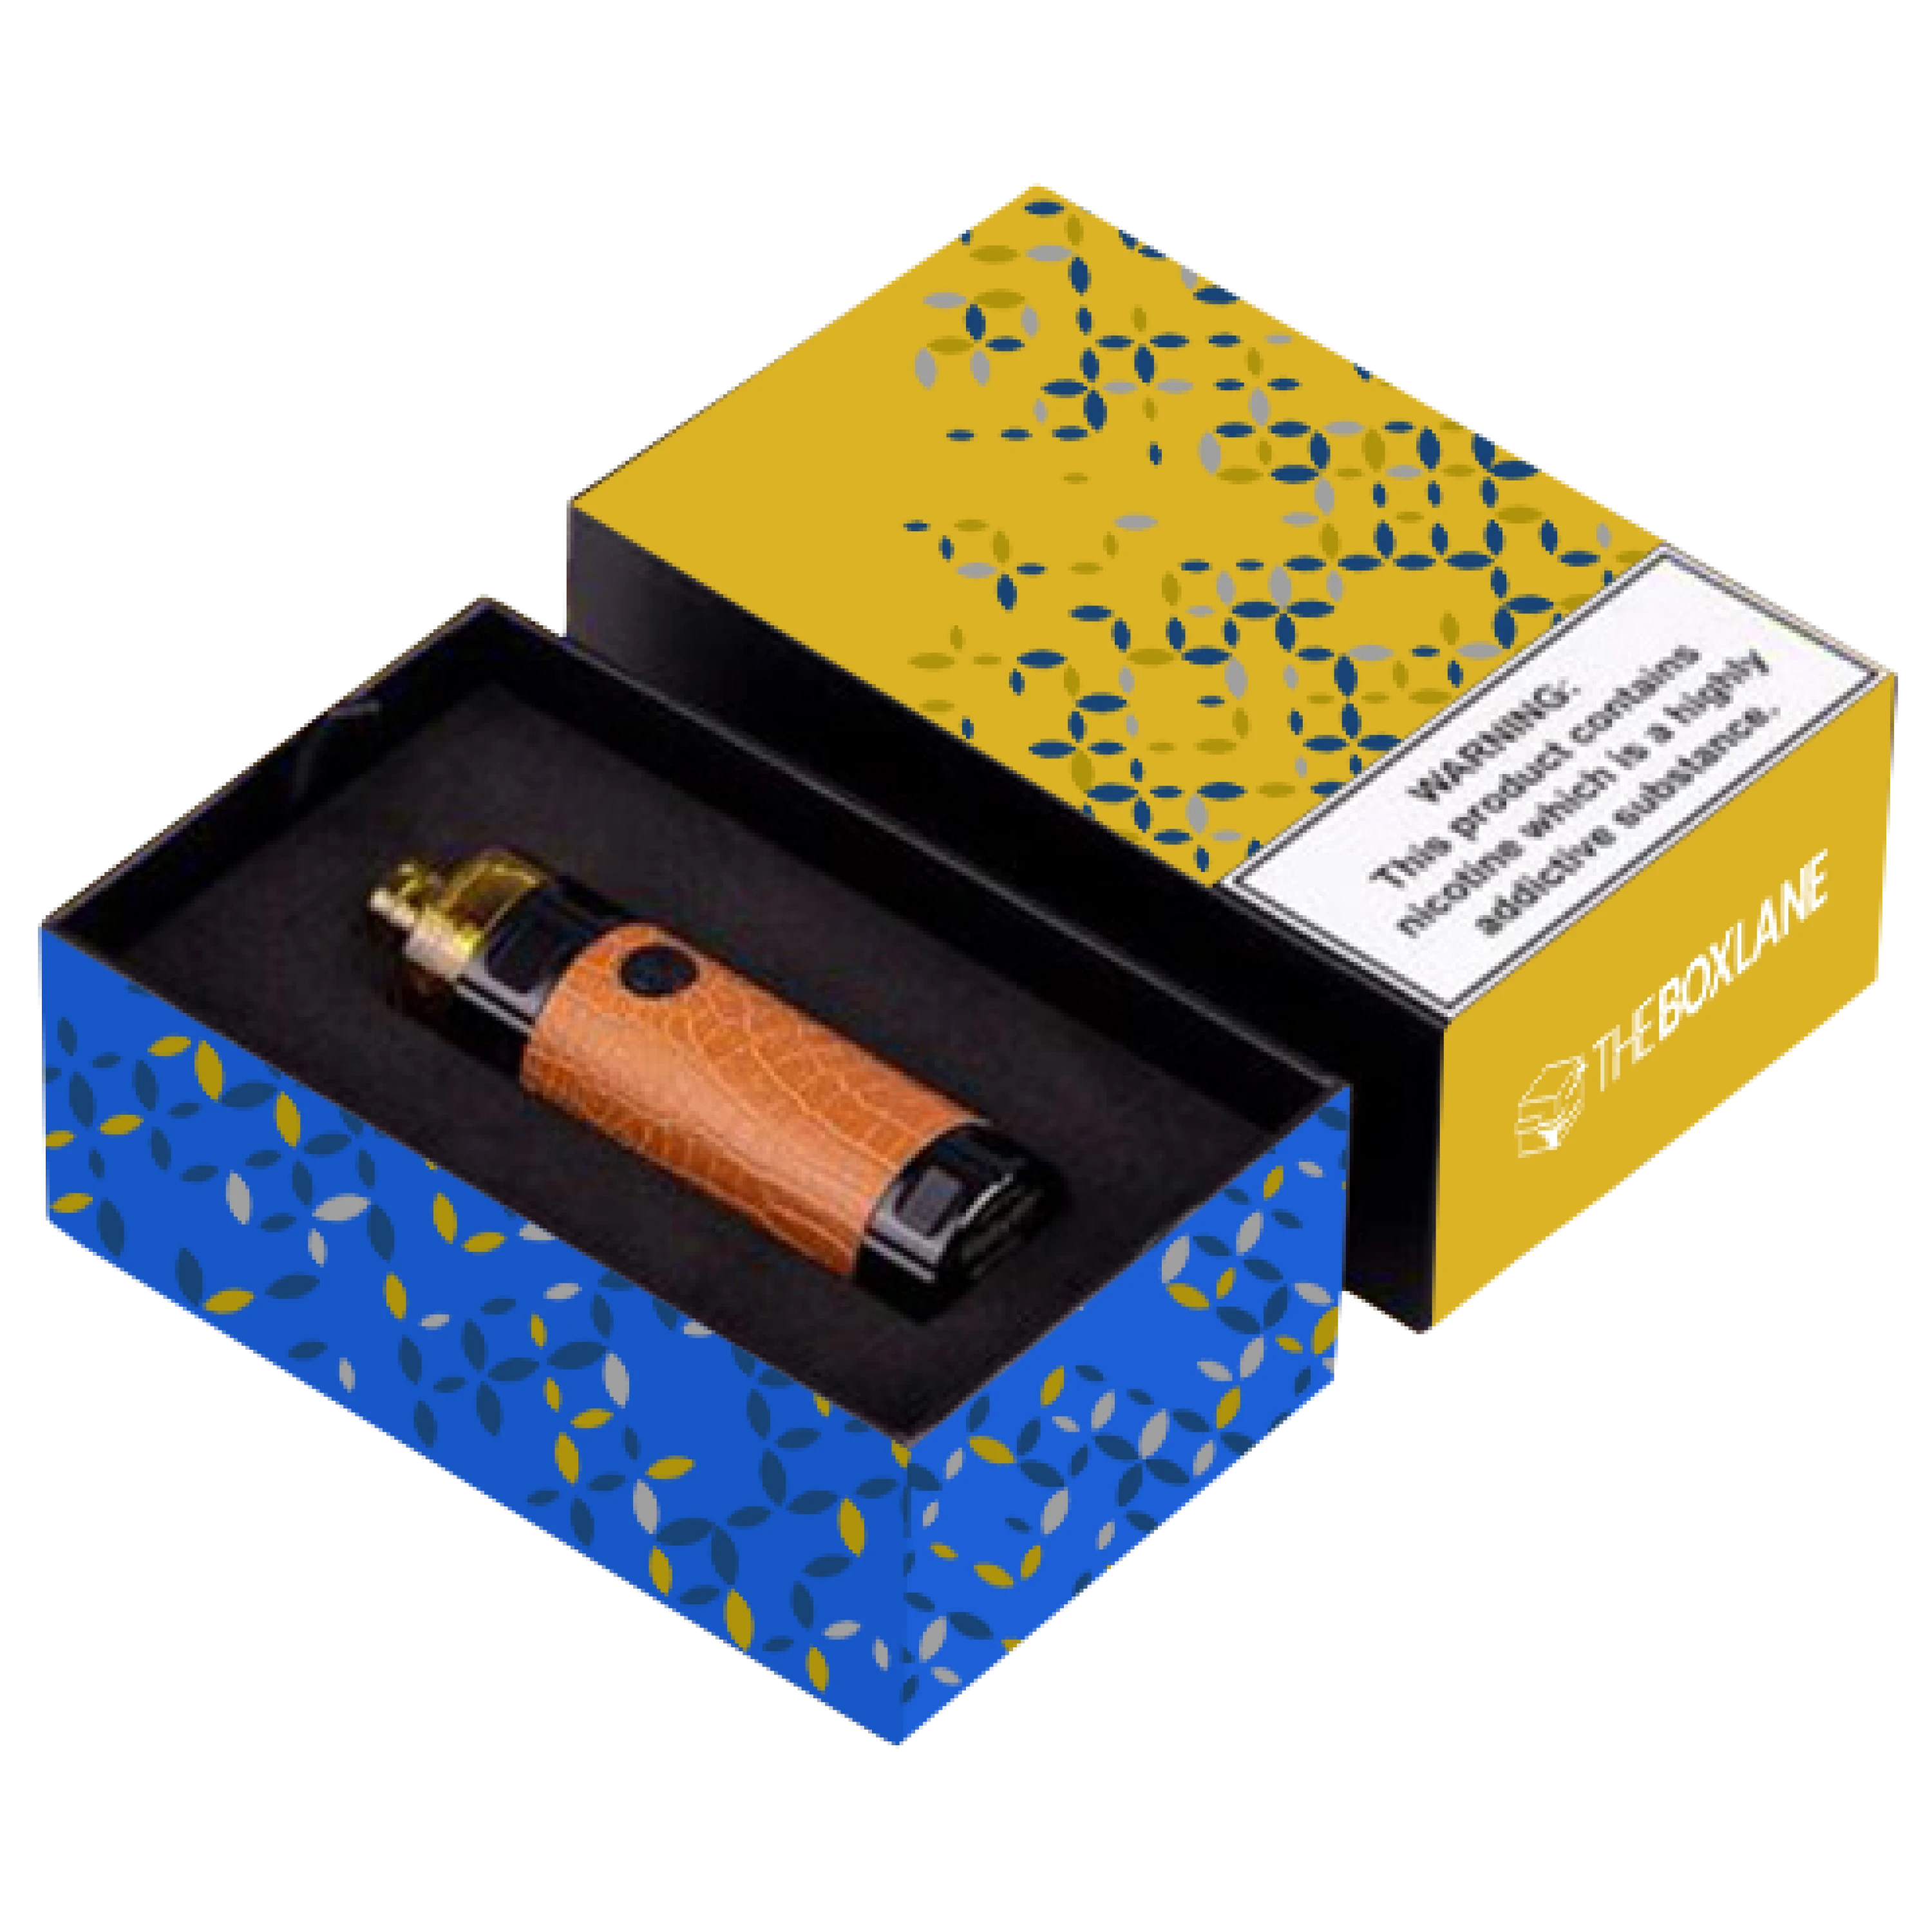 Carousel Custom Electronic Cigarette Boxes packaging image 4 | The Box Lane